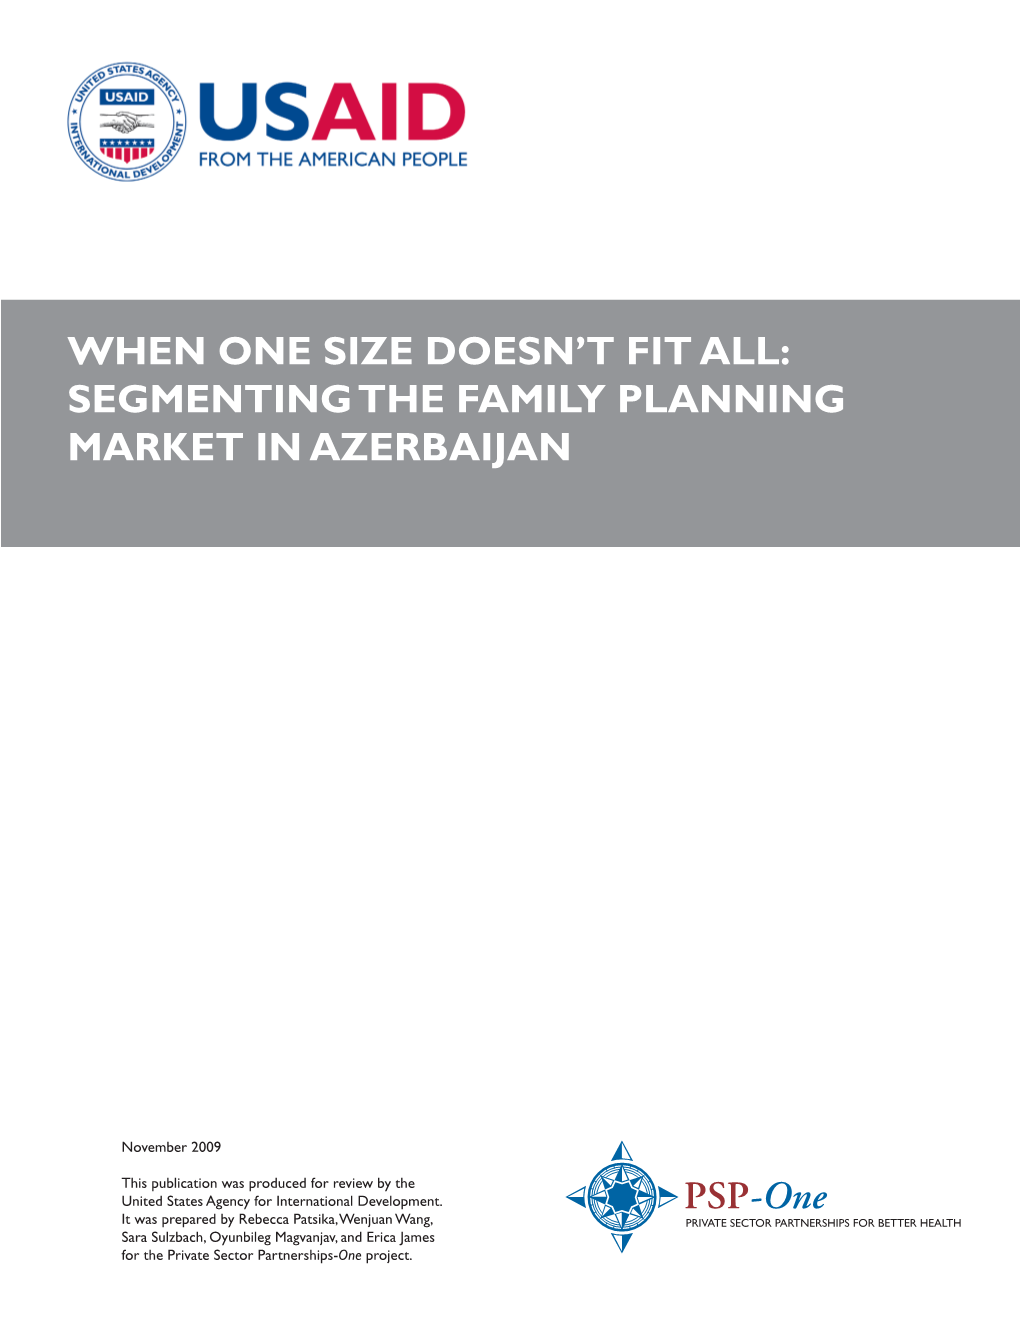 Segmenting the Family Planning Market in Azerbaijan